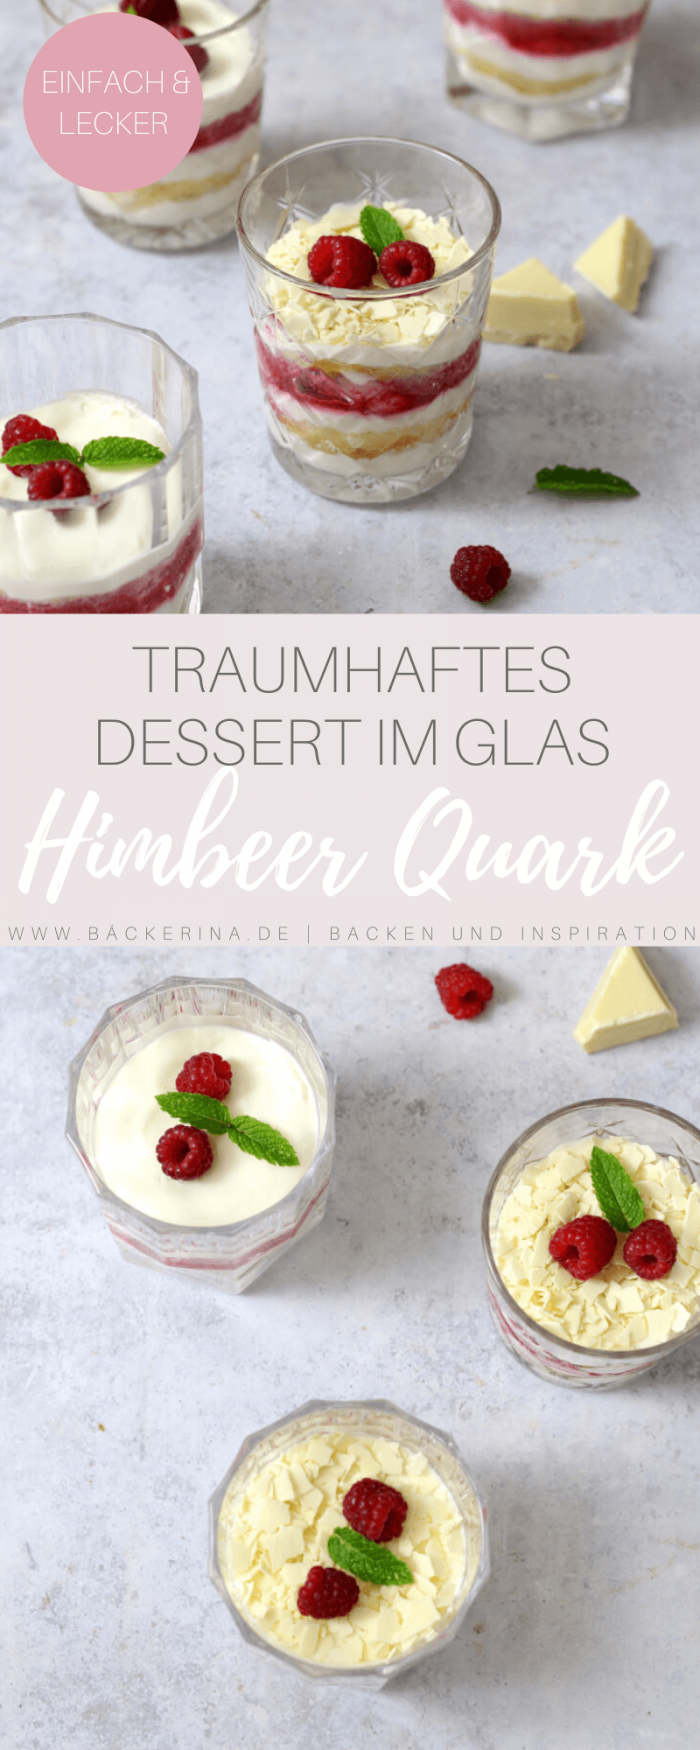 Himbeer Quark Dessert mit weißer Schokolade - Bäckerina